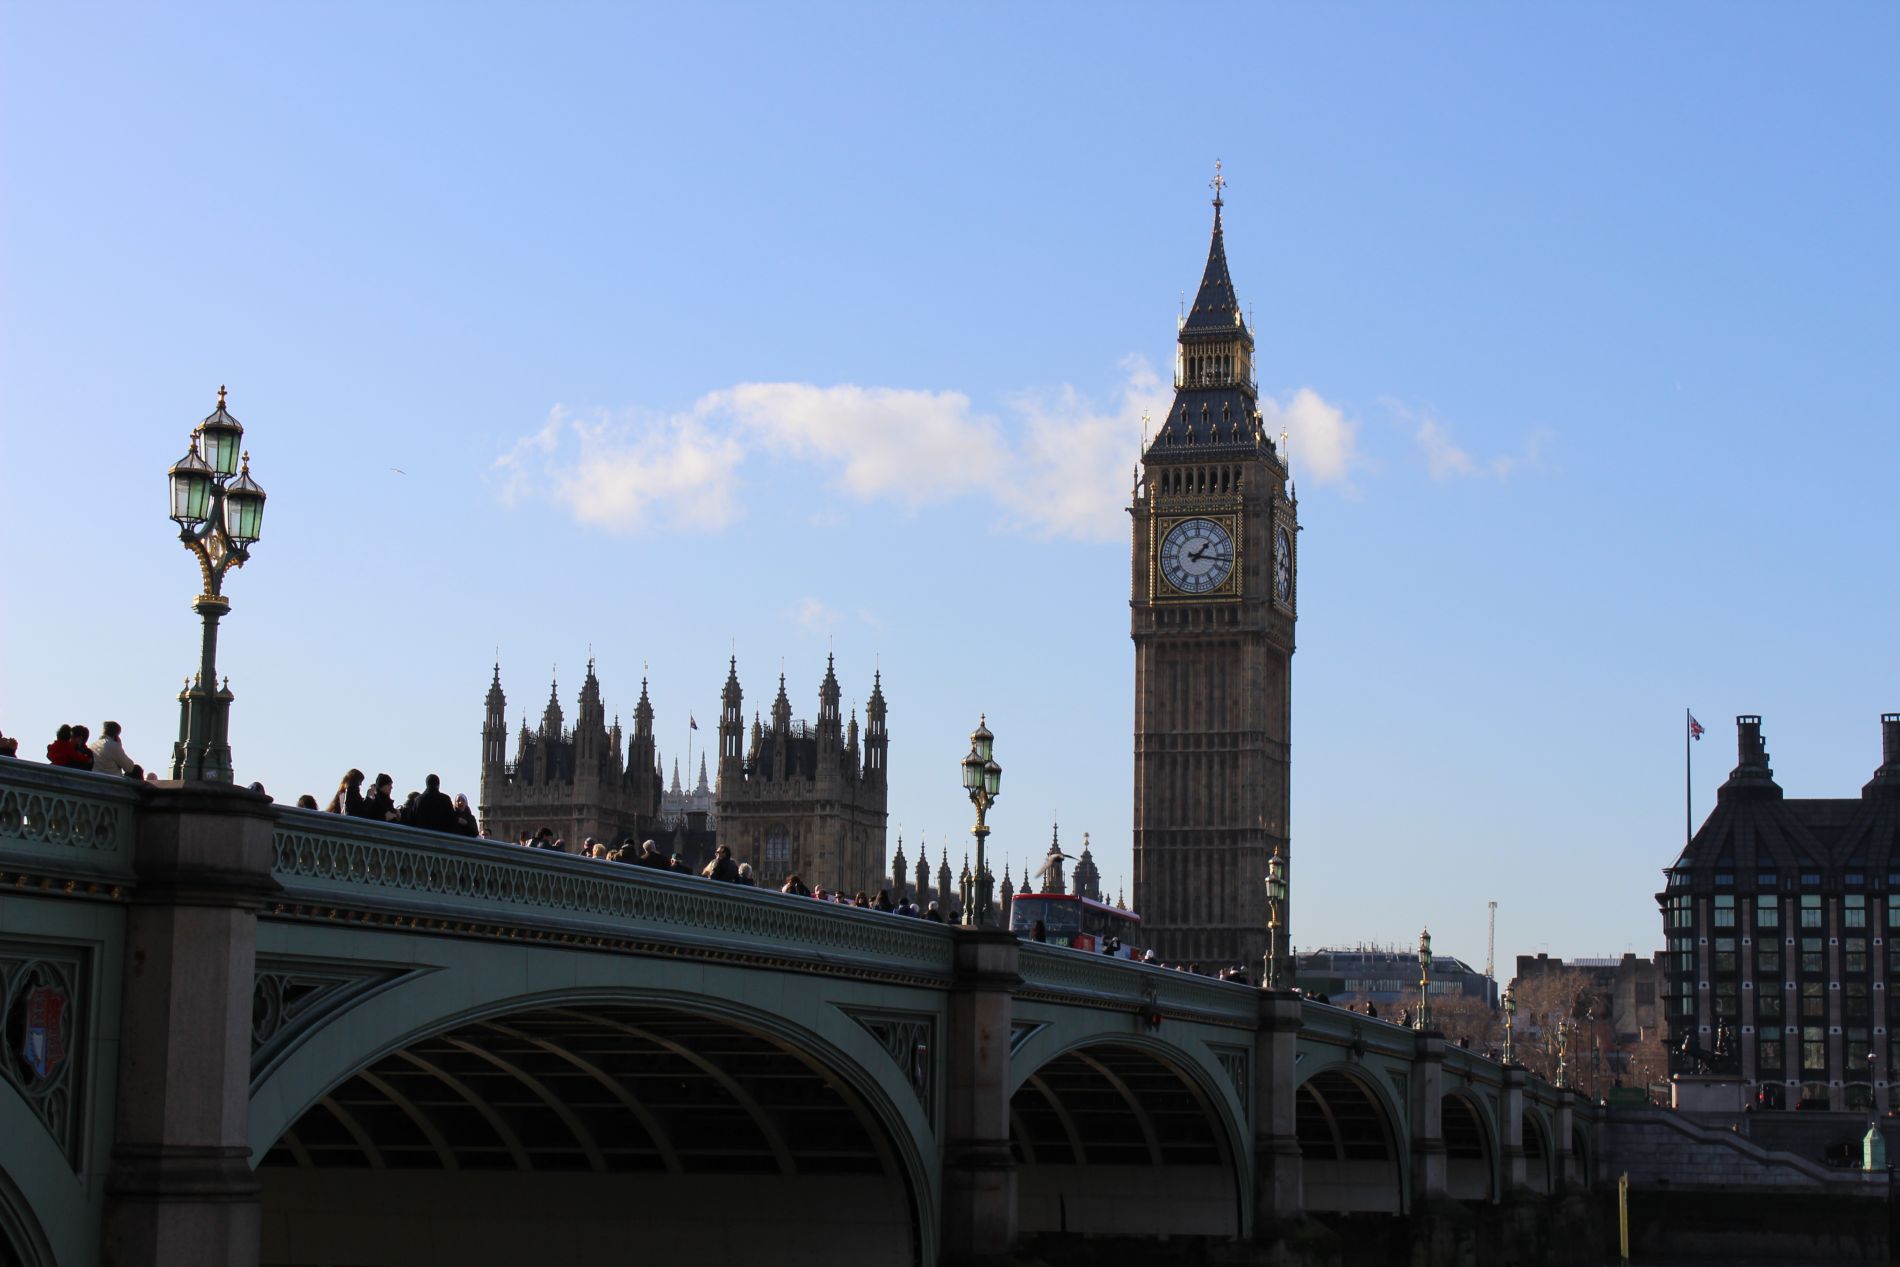 Westminster by Dan Bull via Wikimedia Commons